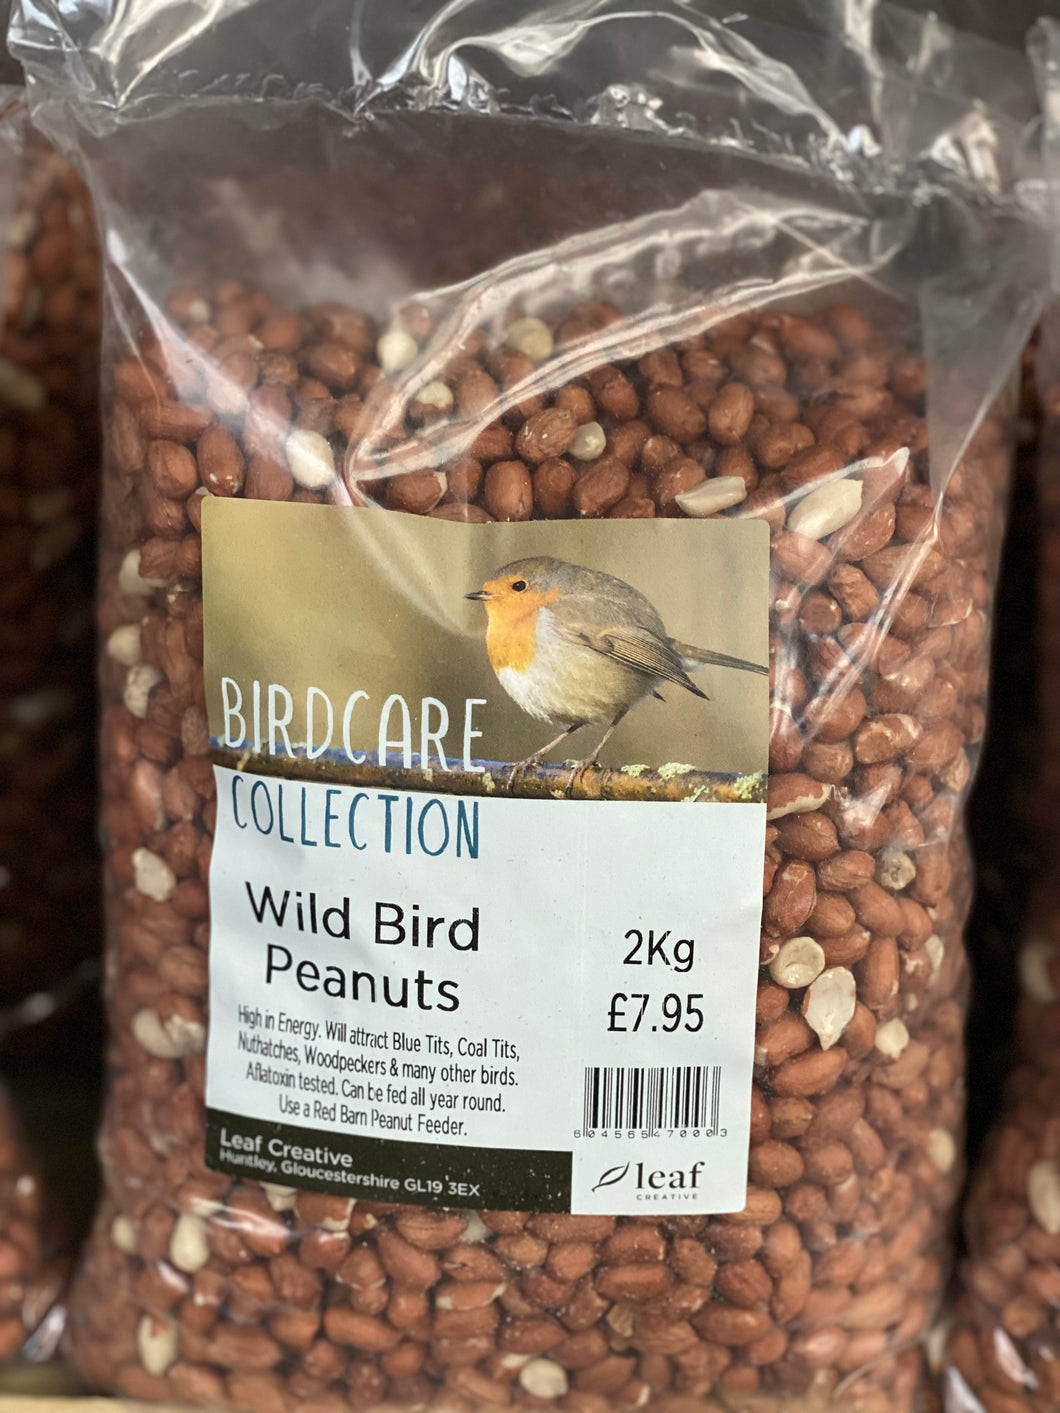 Wild bird Peanuts